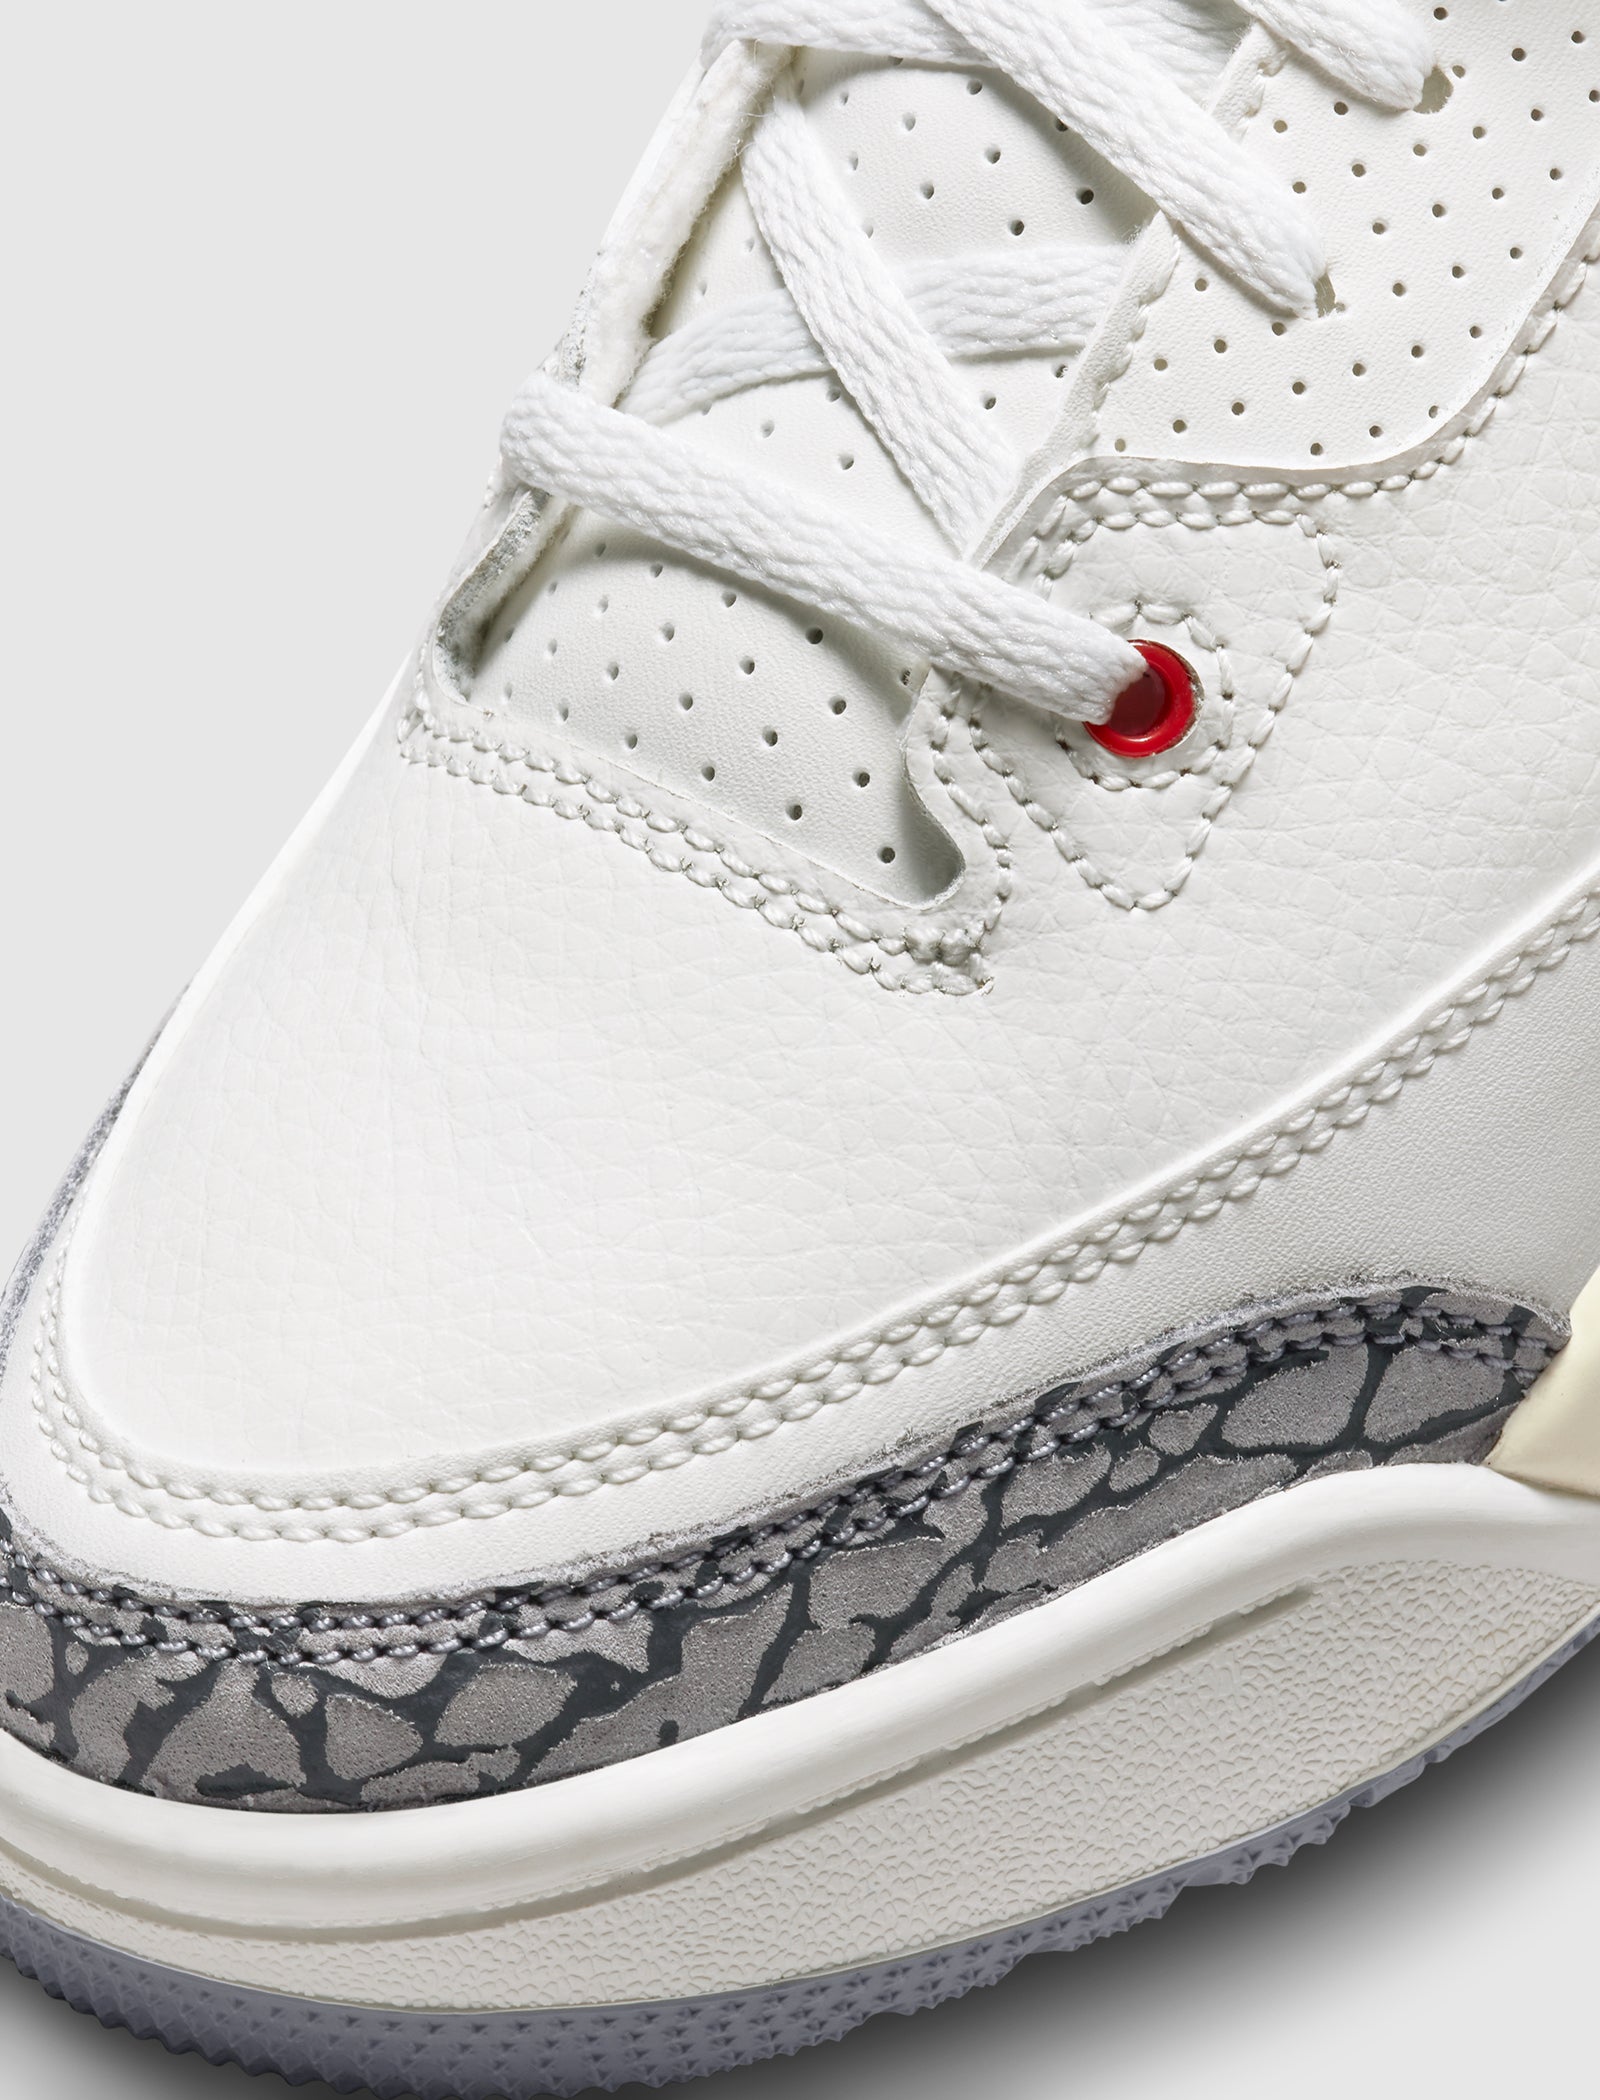 Air Jordan 3 'White Cement Reimagined